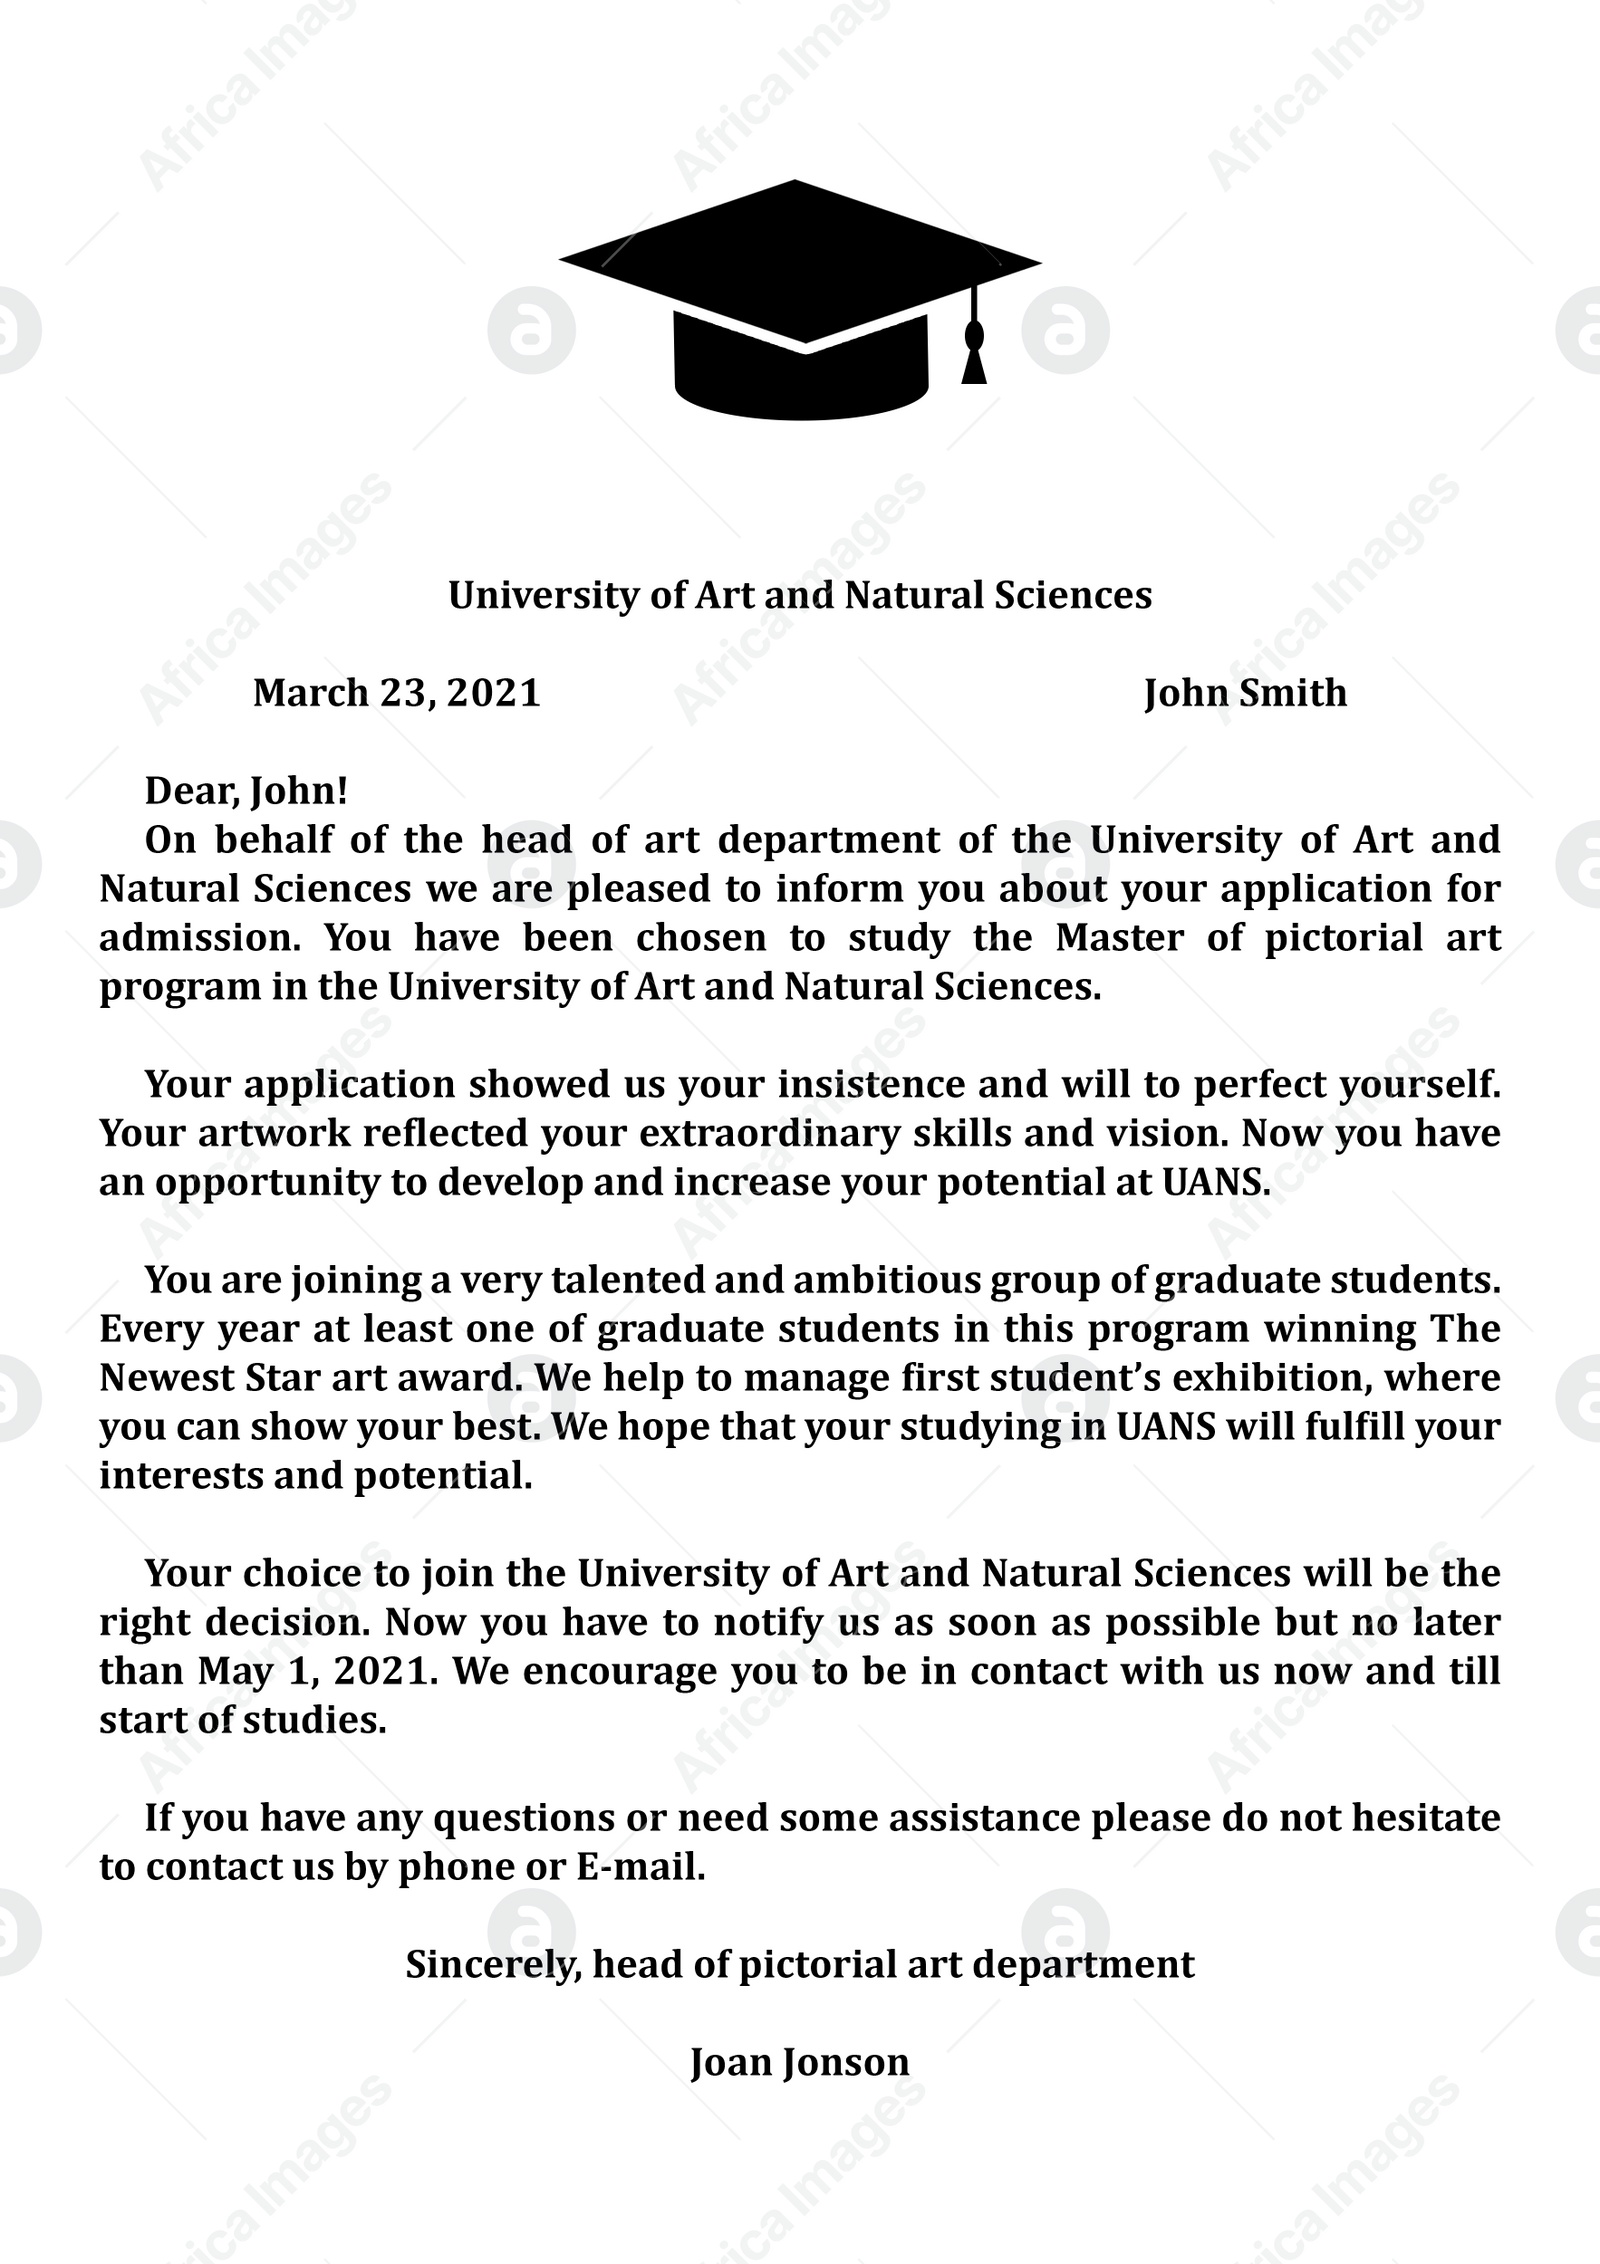 Illustration of University acceptance letter to prospective student, illustration